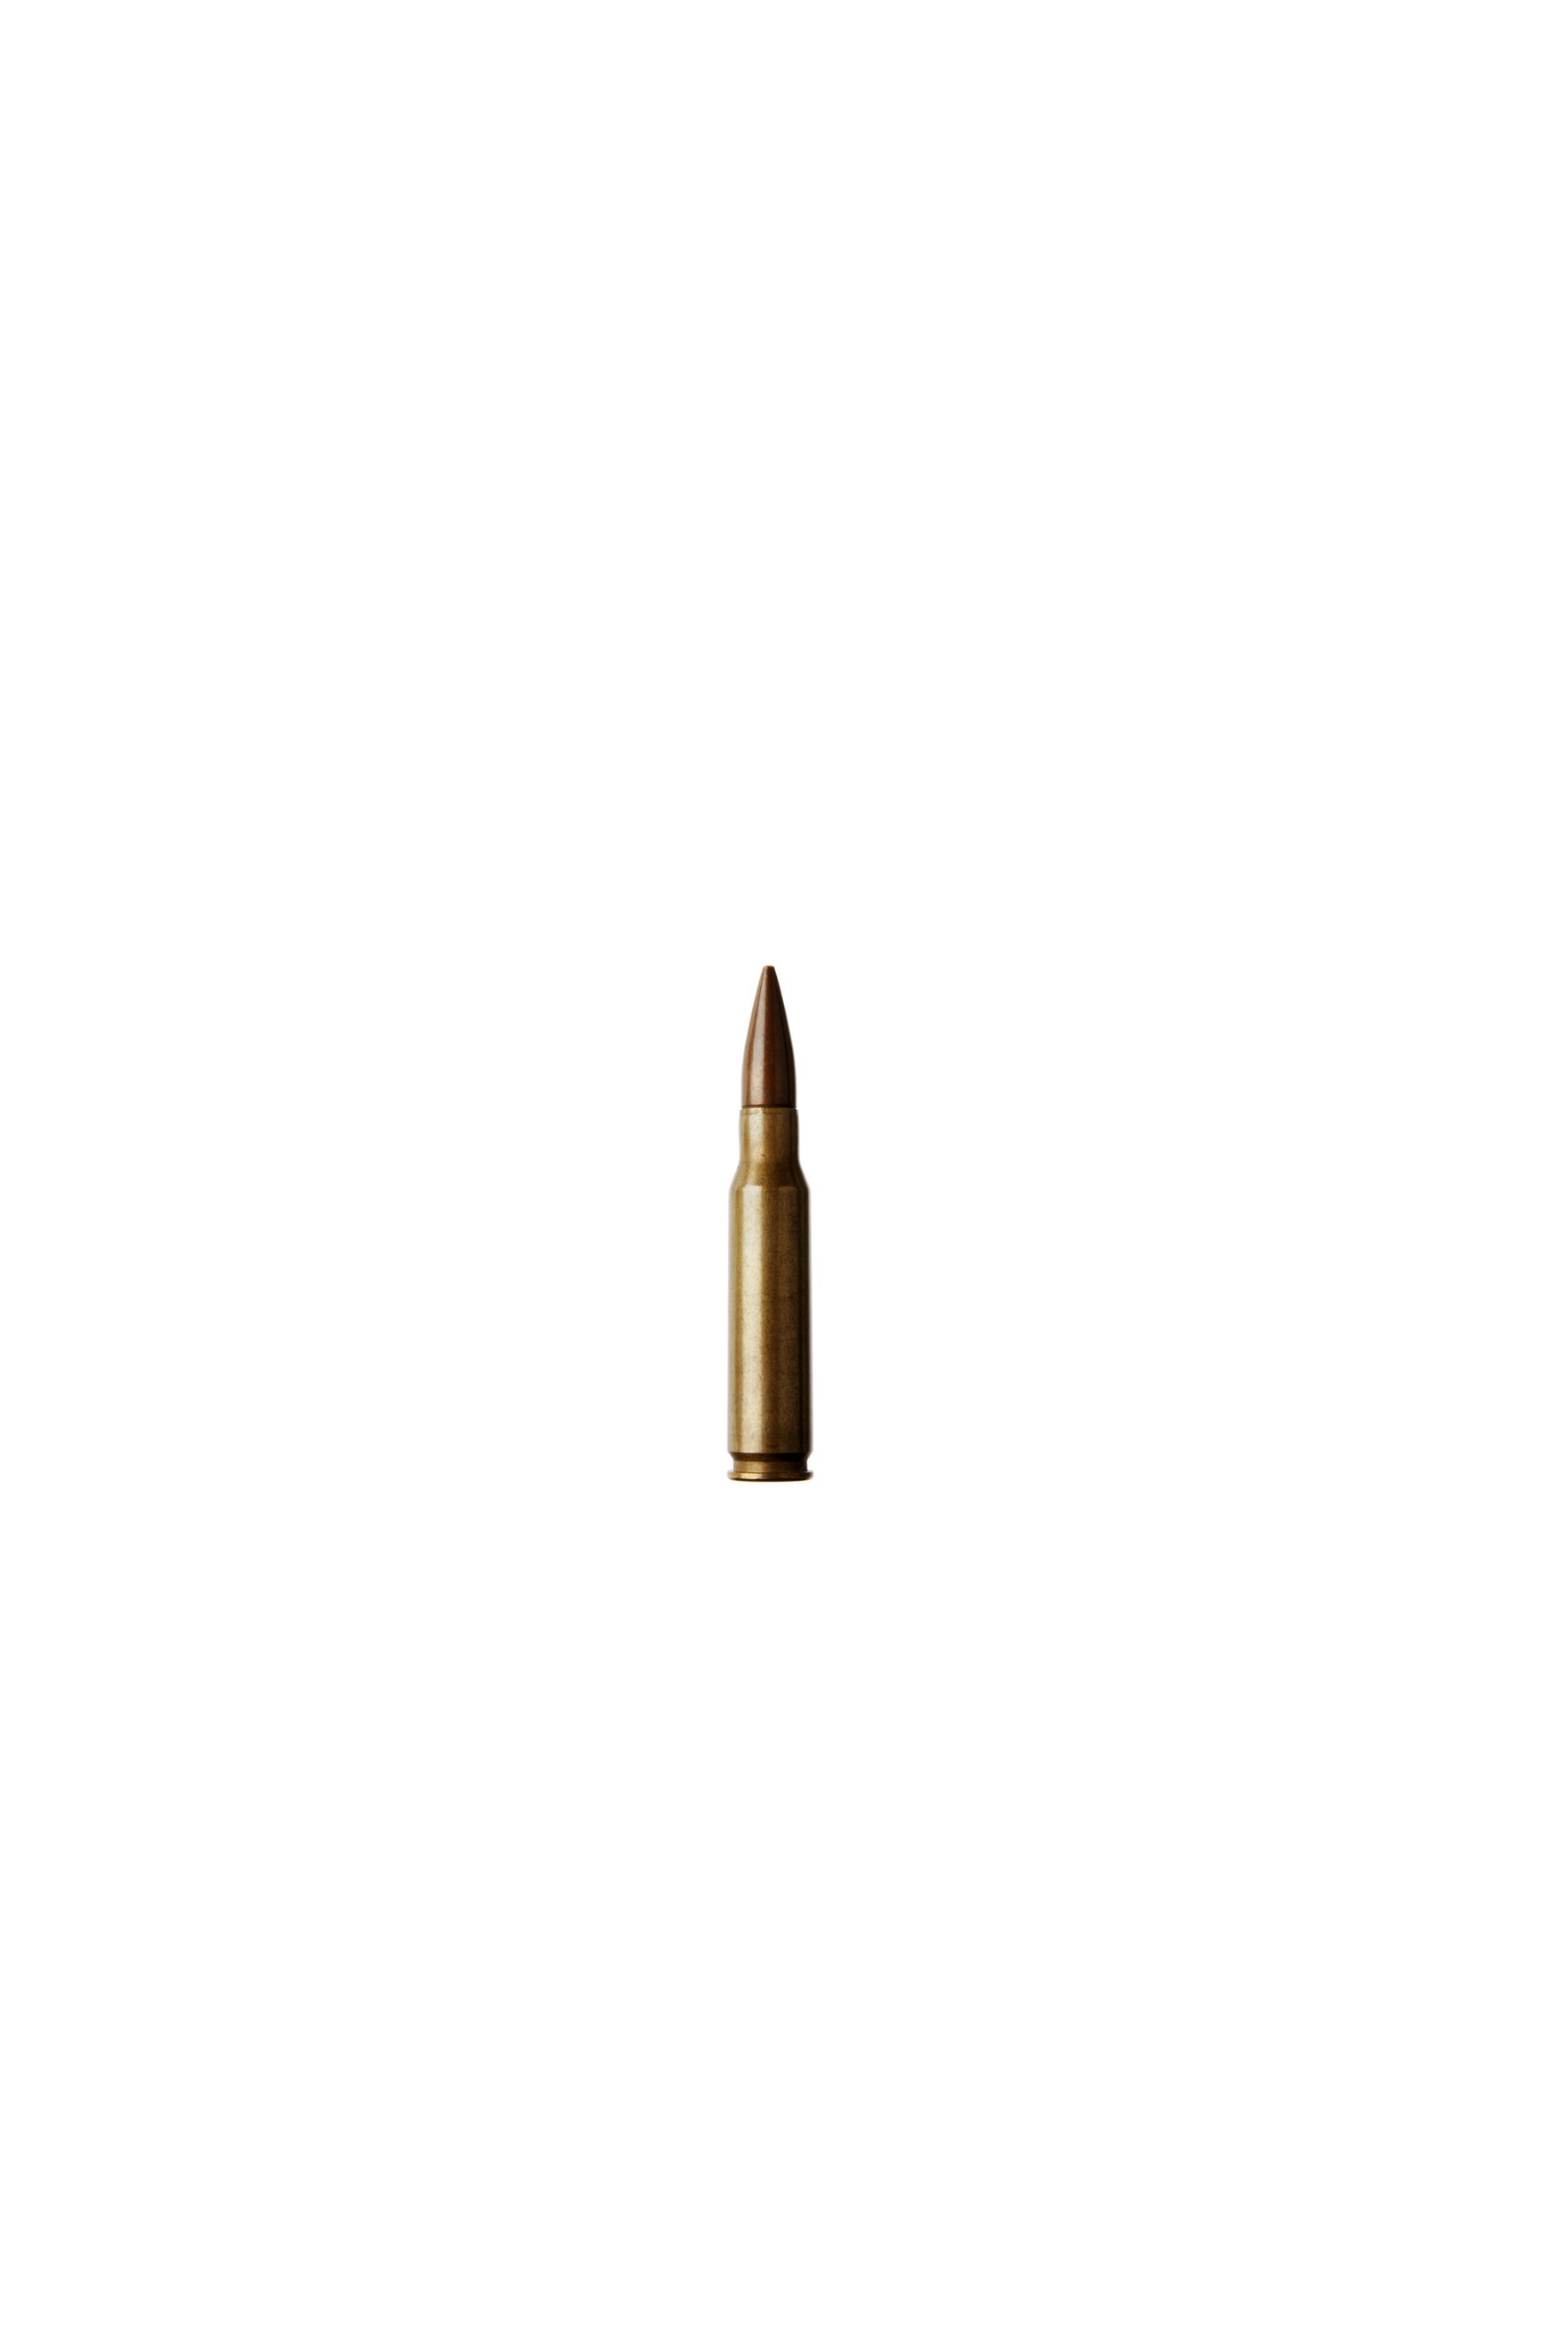 61 bullet - Christien Meindertsma, PIG 05049.jpg